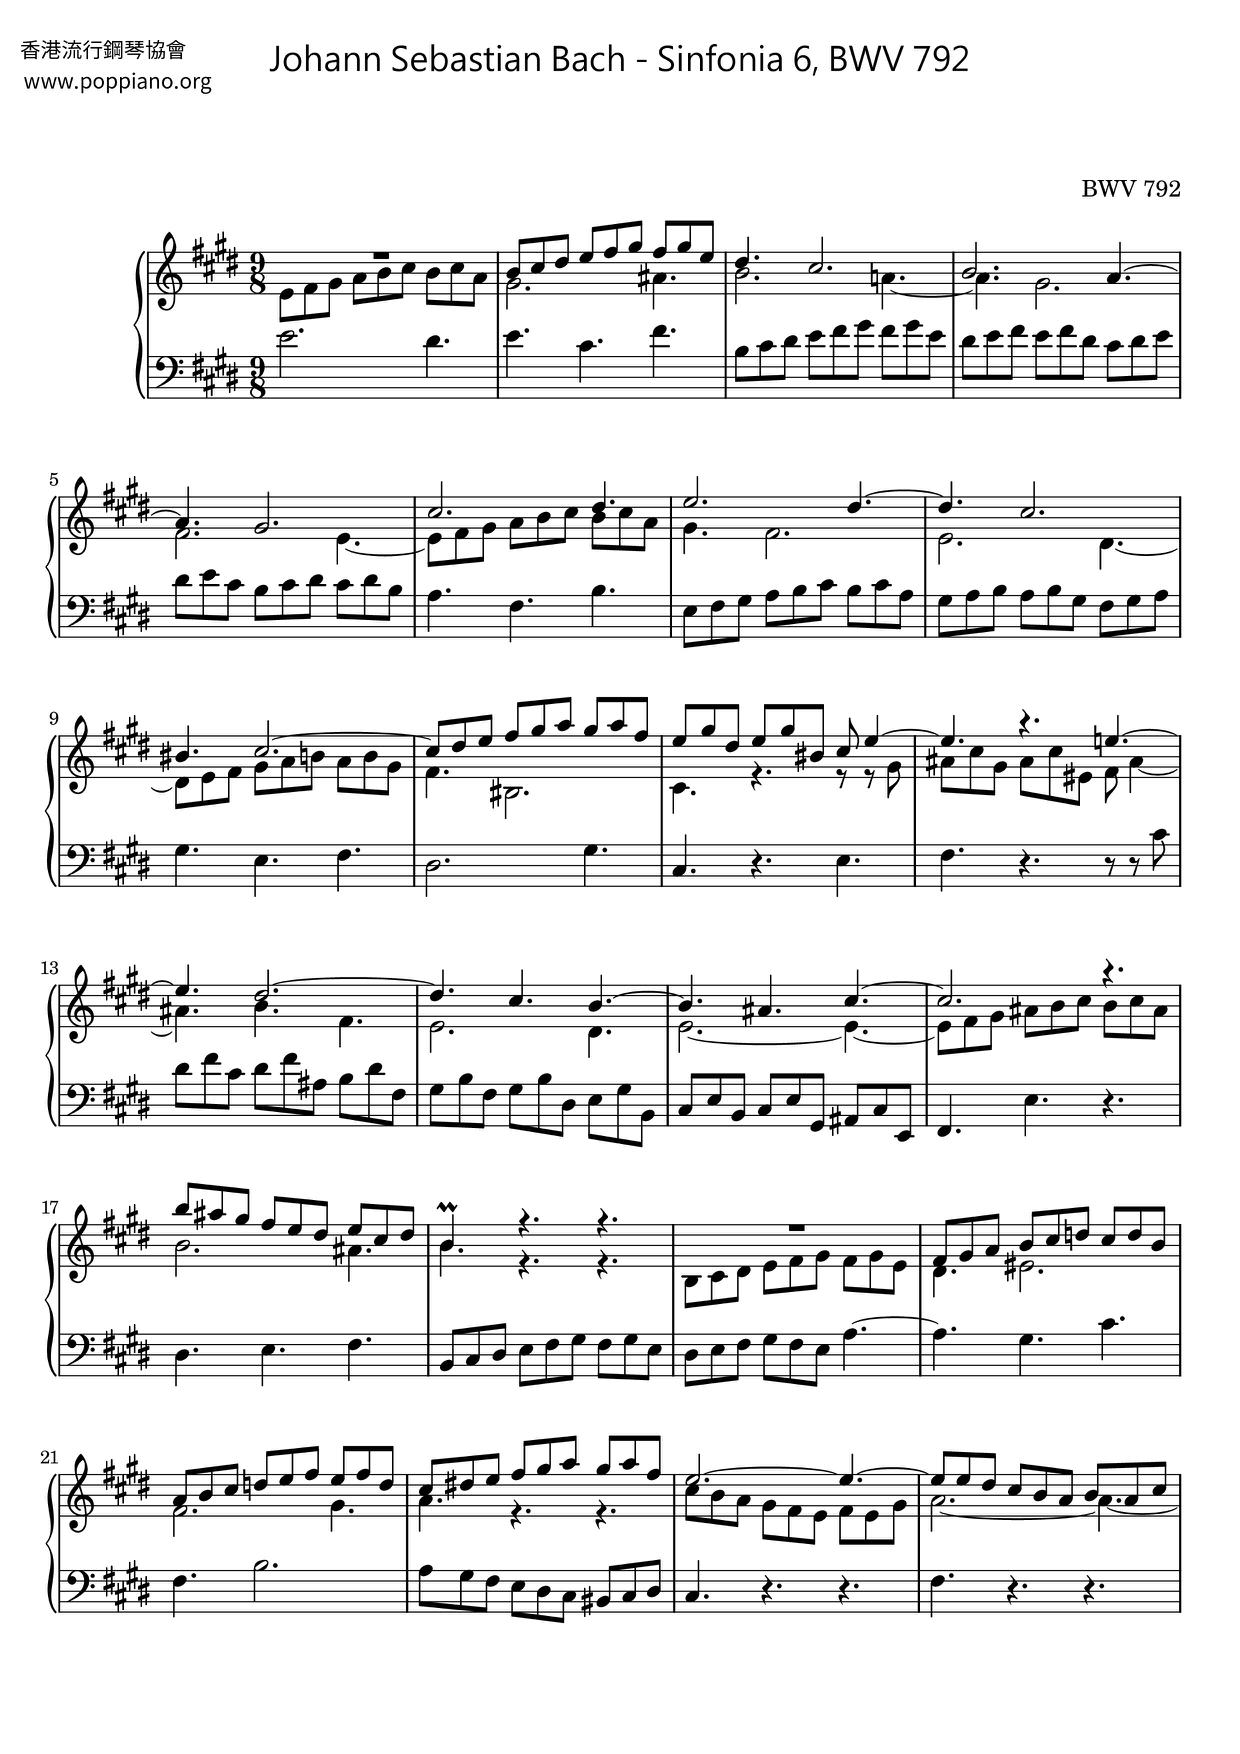 Sinfonia 6, BWV 792 Score